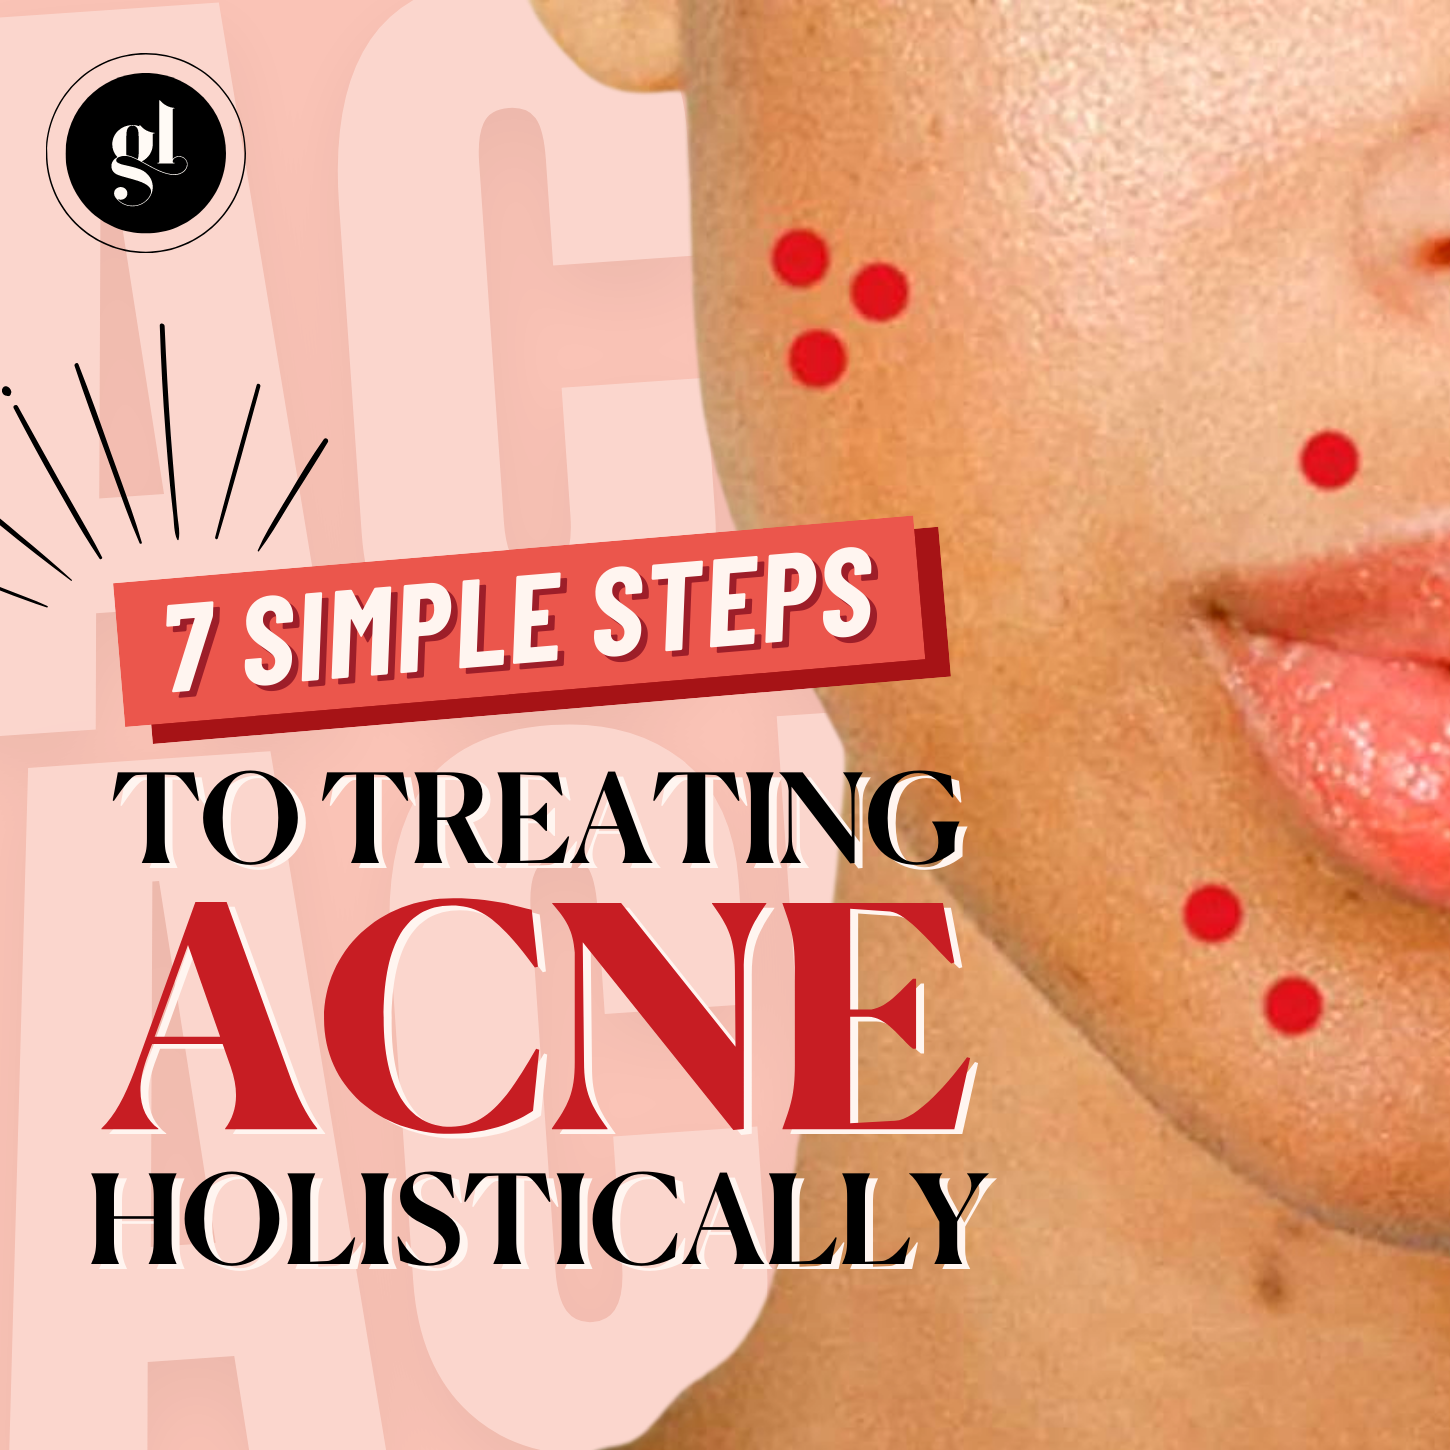 7 Simple Steps to Treating Acne Holistically